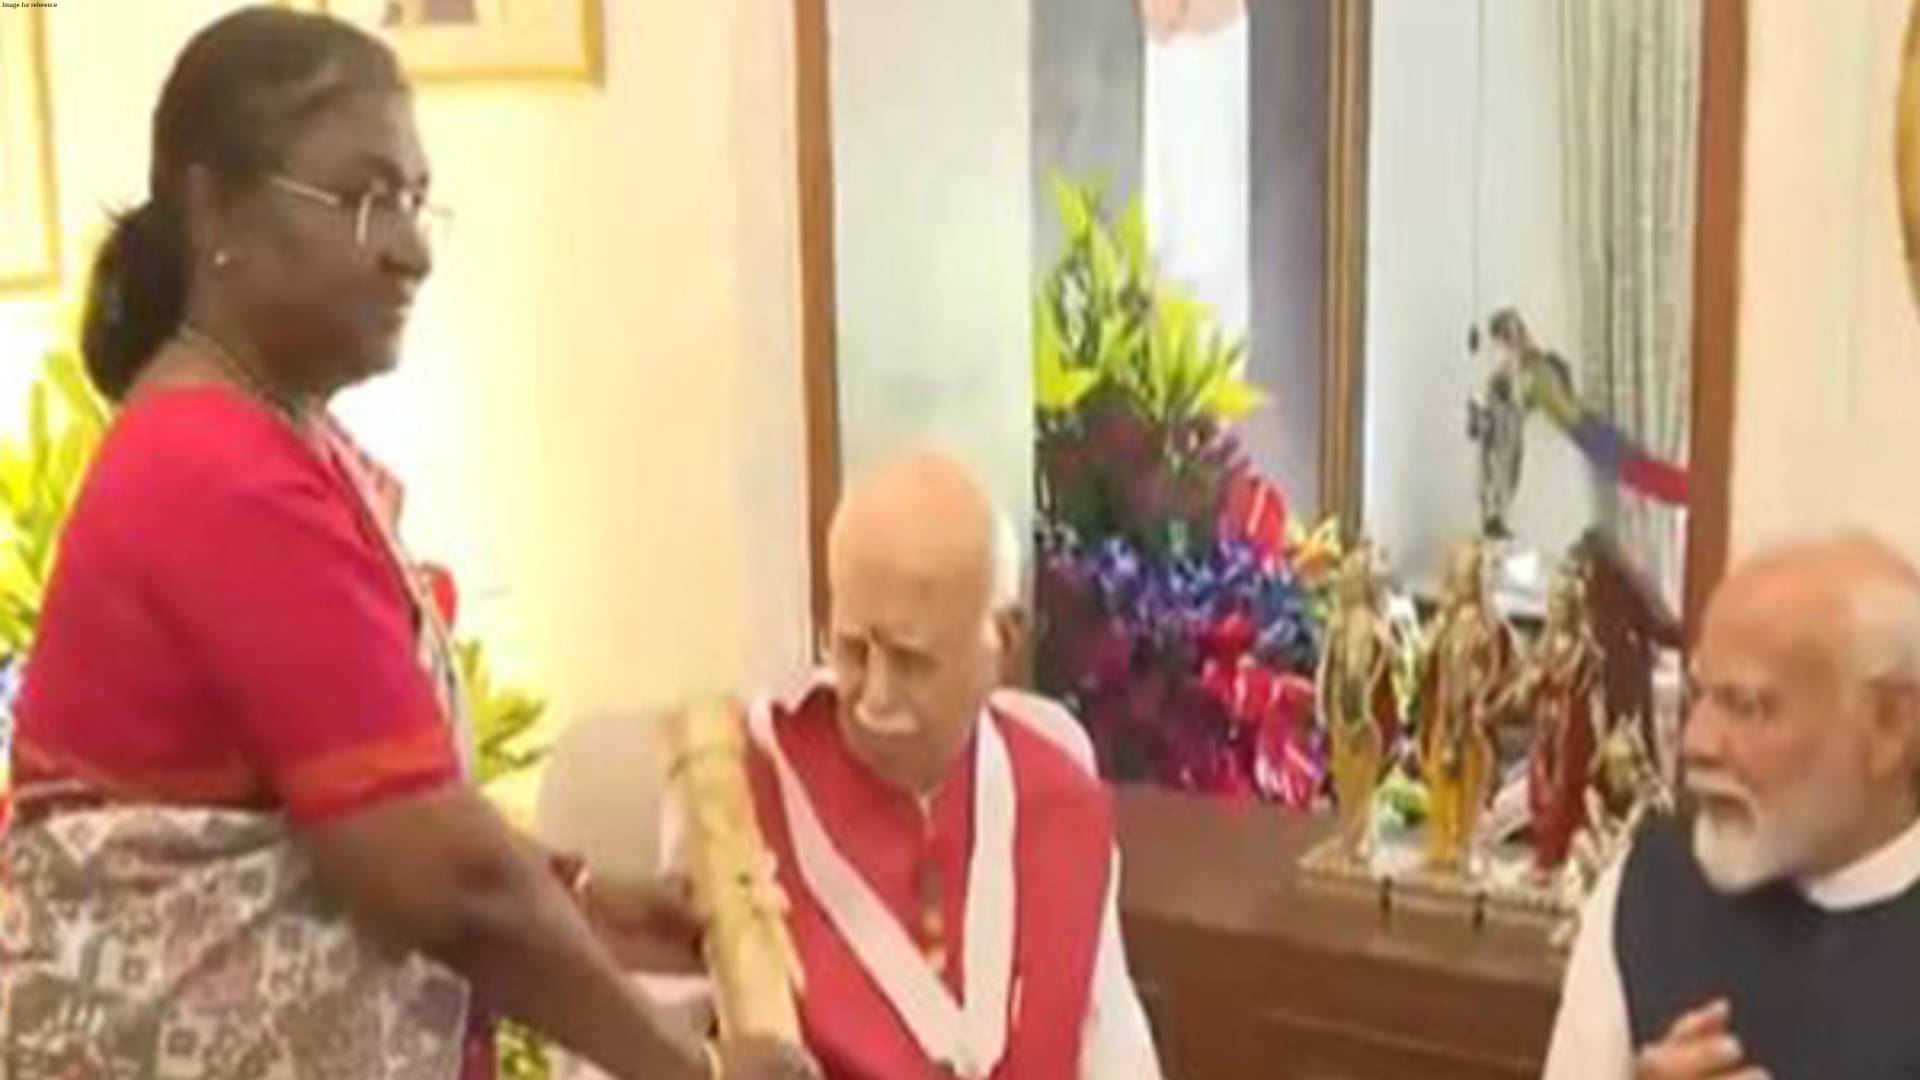 President Murmu confers Bharat Ratna to BJP stalwart LK Advani at his residence